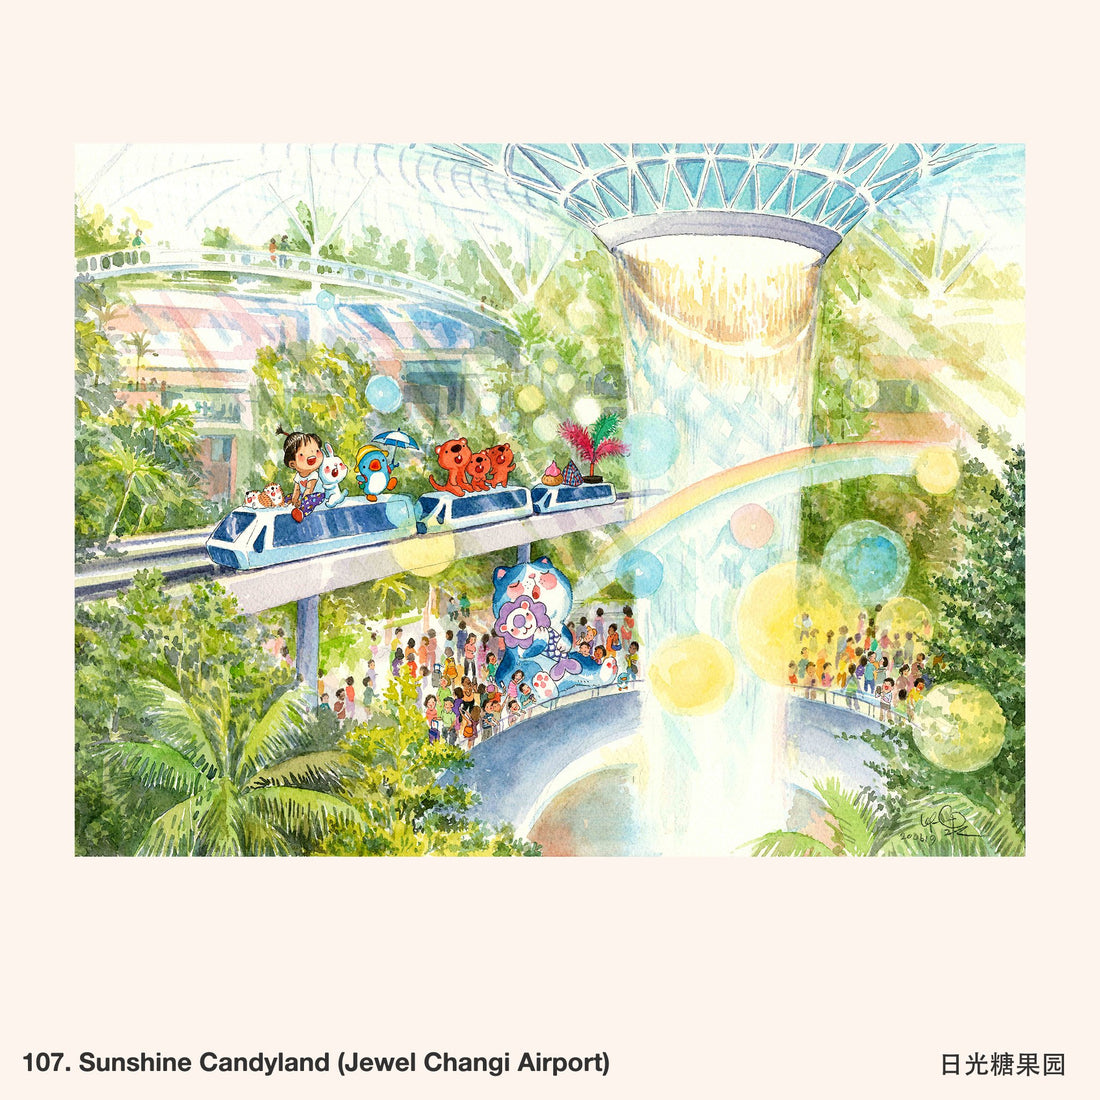 107. Sunshine Candyland (Jewel Changi Airport) Artwork